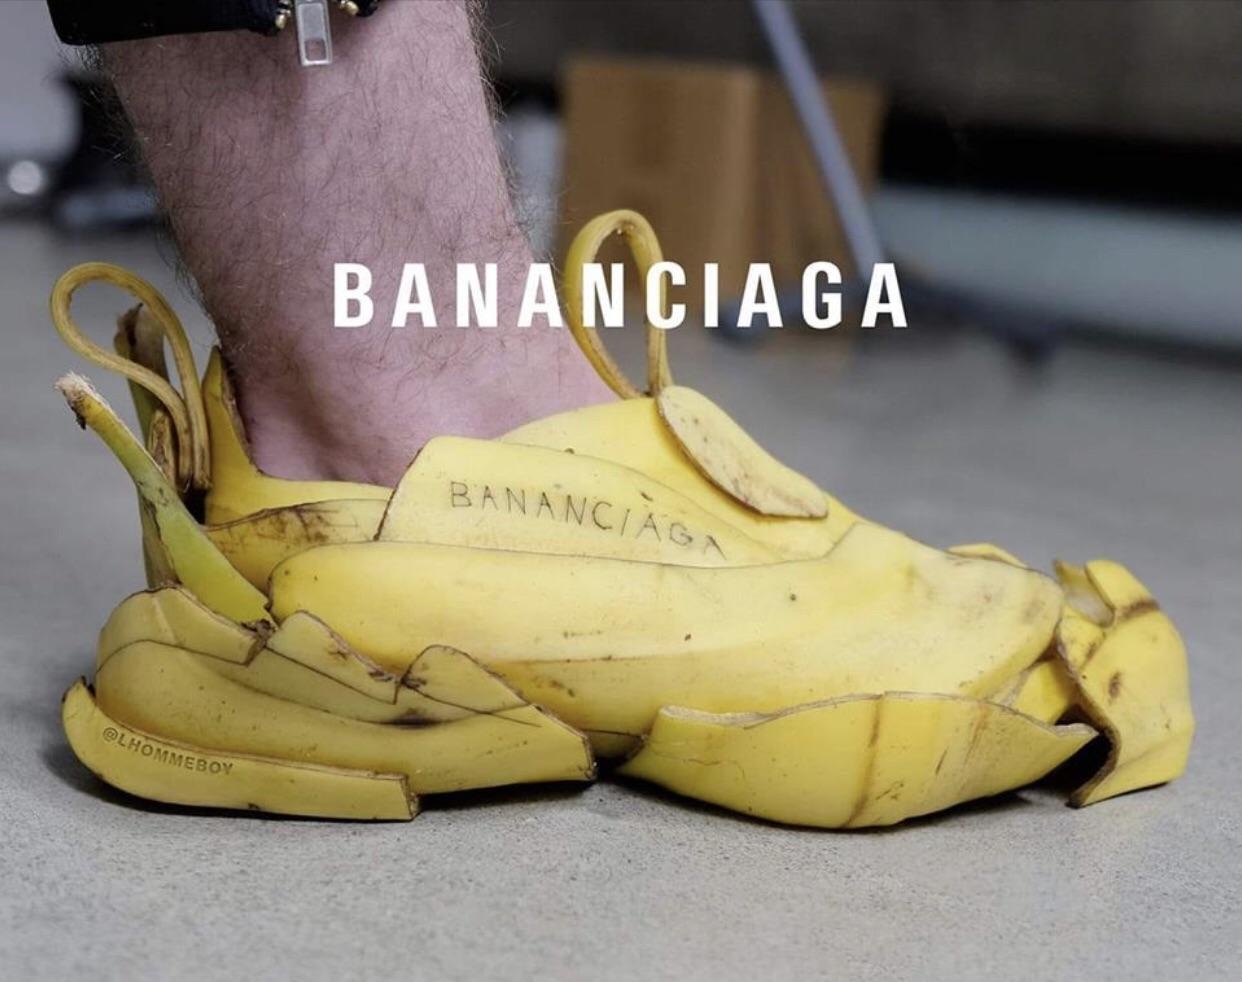 bananciaga meme